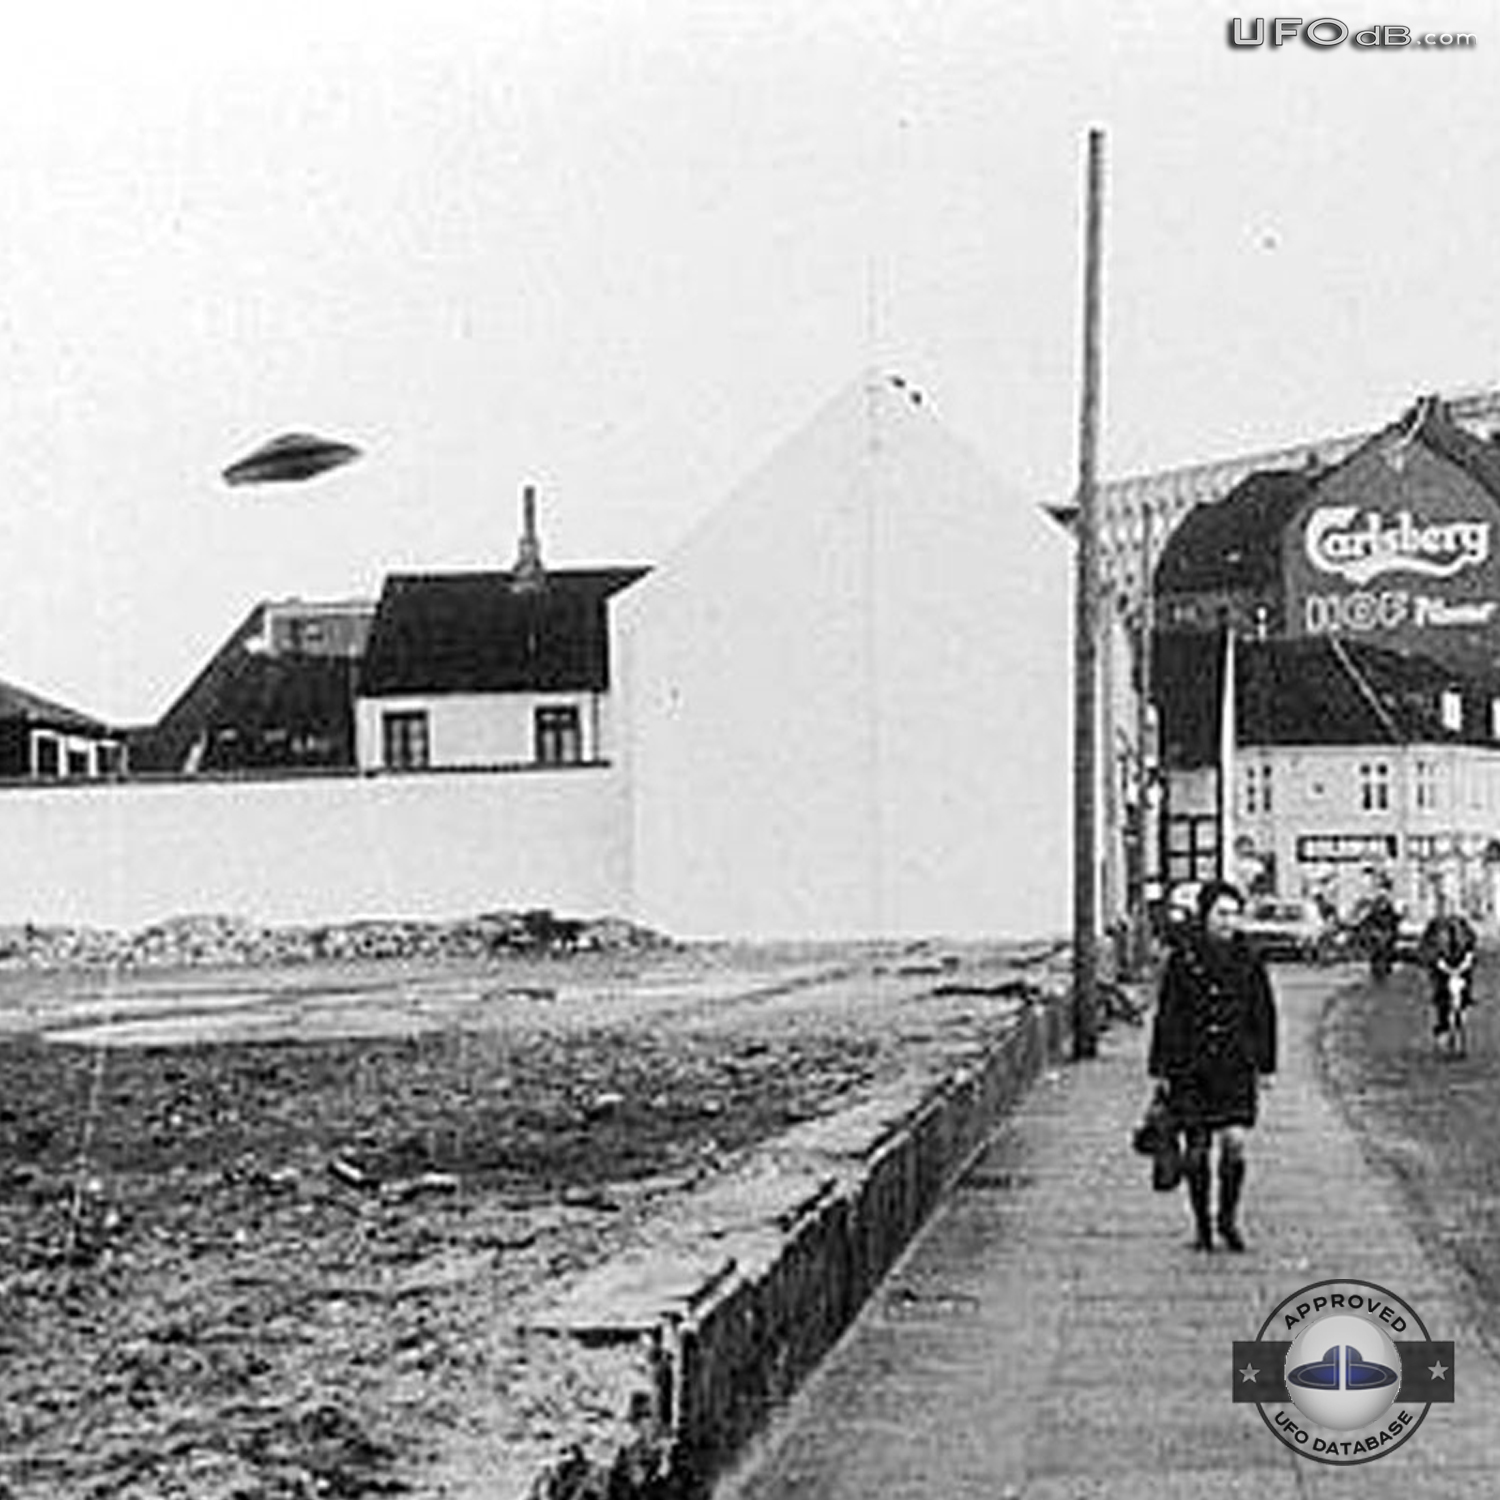 Aarhus Denmark - Rare Classic Saucer Shape UFO picture | November 1971 UFO Picture #320-2